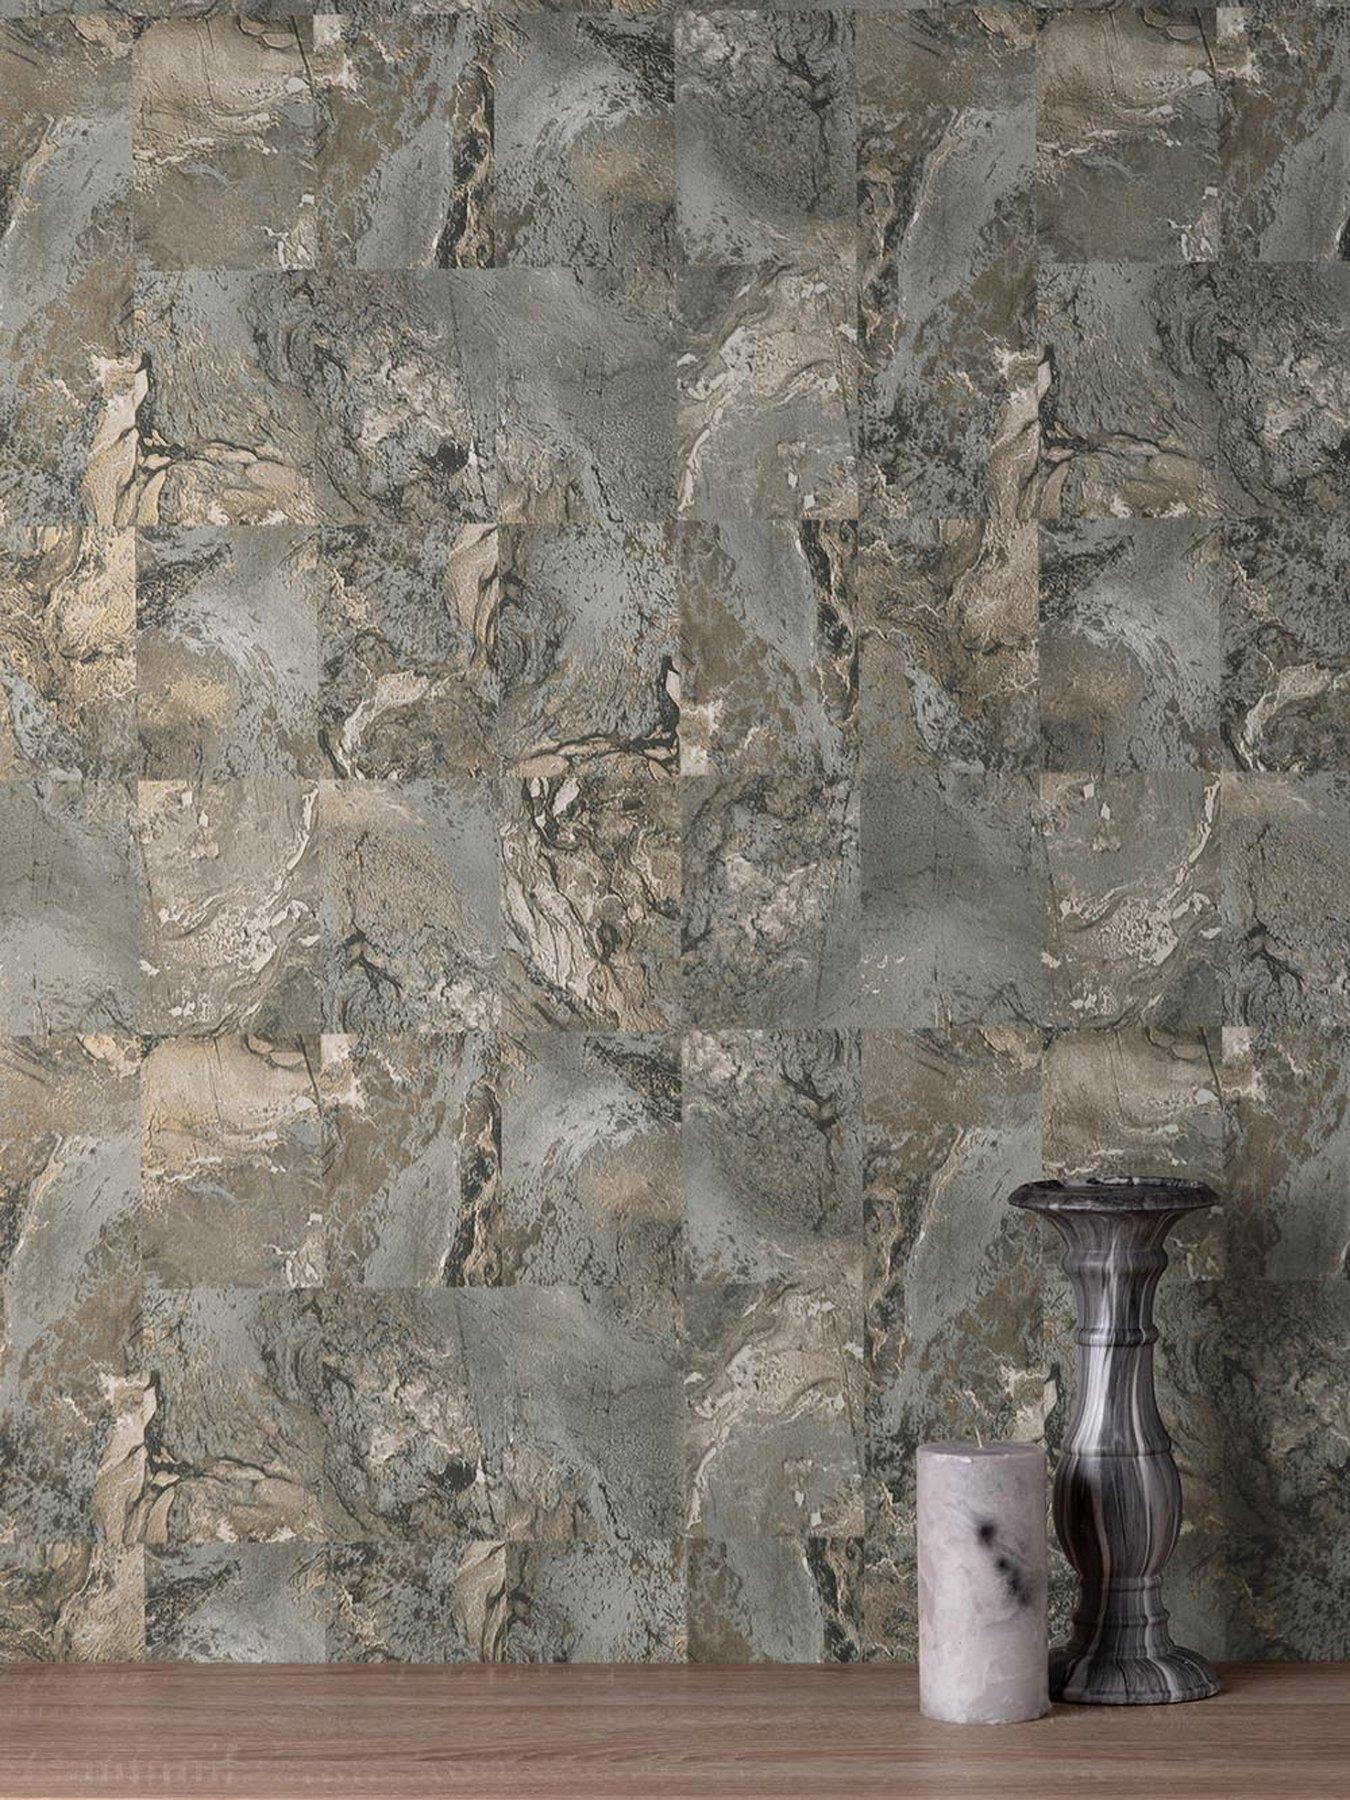 Product photograph of Vymura Savona Marble Tile Wallpaper Ndash Slate from very.co.uk